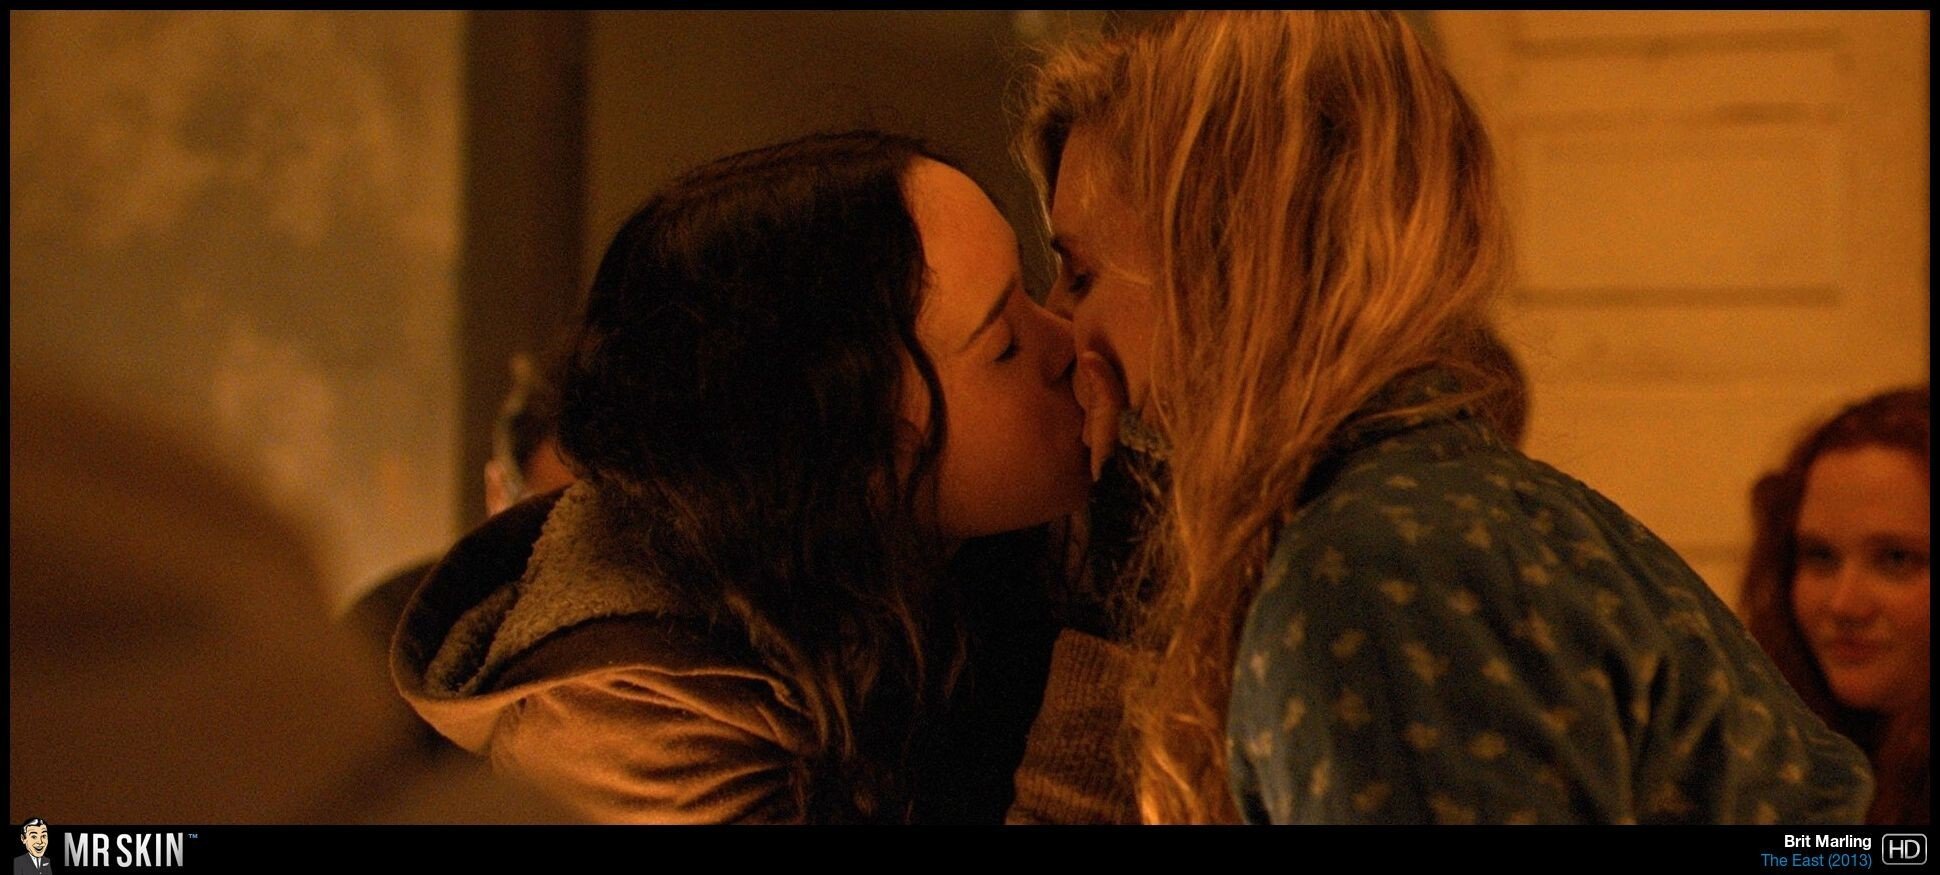 Lesbian page 1. Эллен пейдж поцелуй. Эллен пейдж и Брит Марлинг. Эллен пейдж лесбиянство.